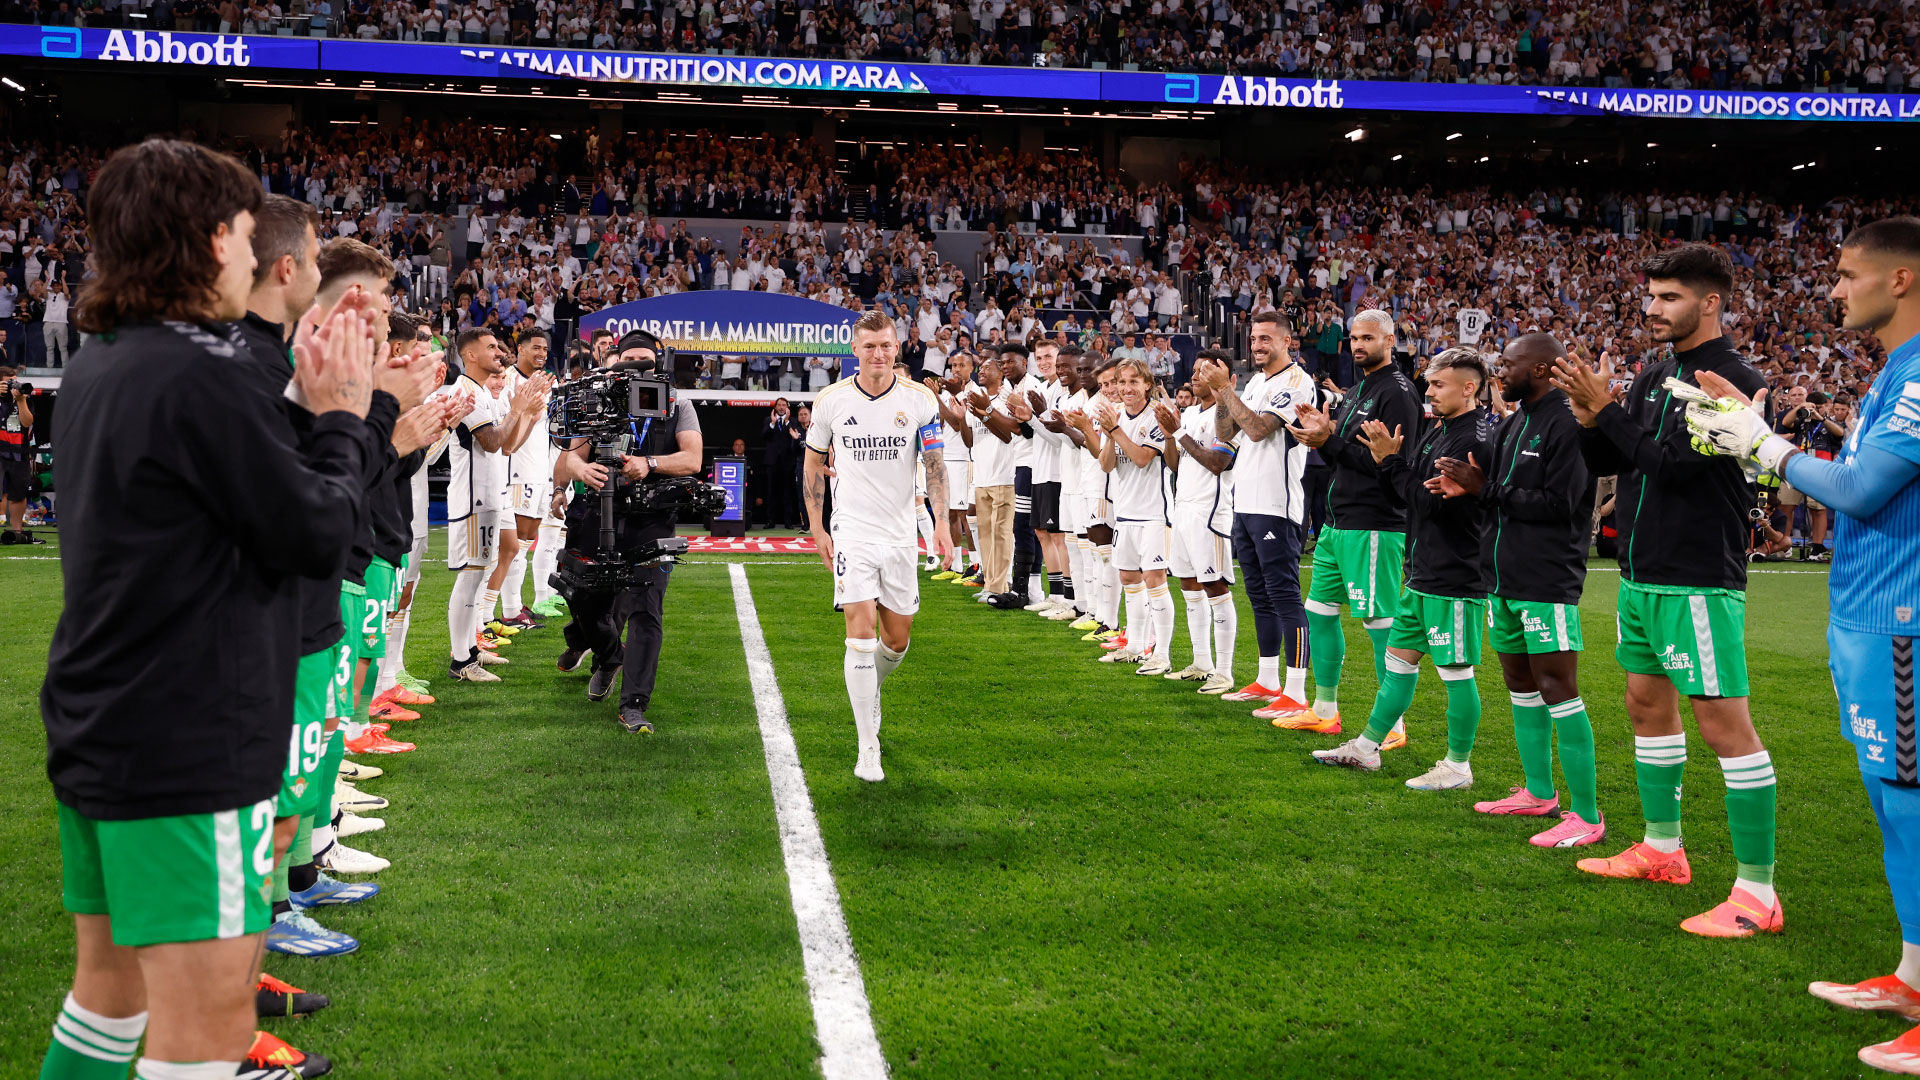 Moving tribute to Kroos at the Santiago Bernabéu